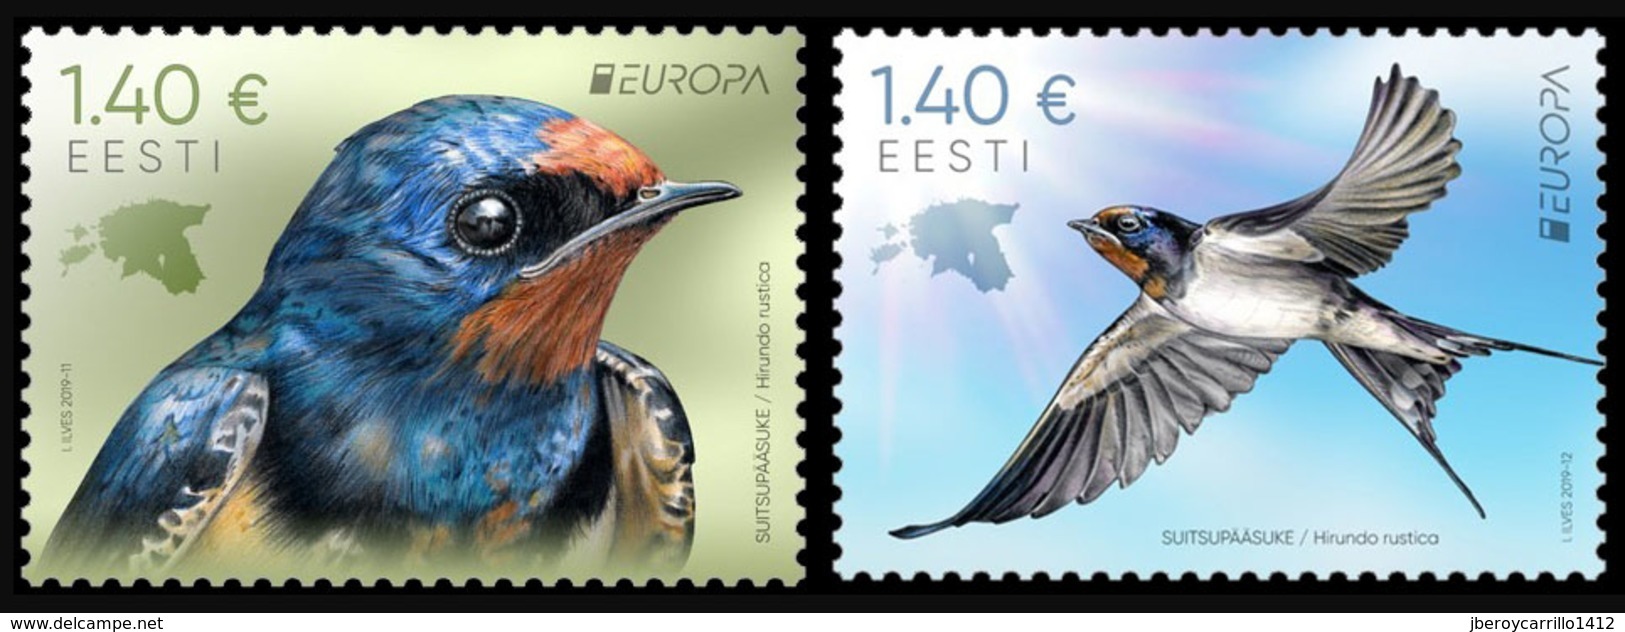 ESTONIA /ESTLAND /EESTI /ESTONIE - EUROPA 2019 -NATIONAL BIRDS.-"AVES - BIRDS - VÖGEL -OISEAUX"- SERIE De 2 TIMBRES - 2019